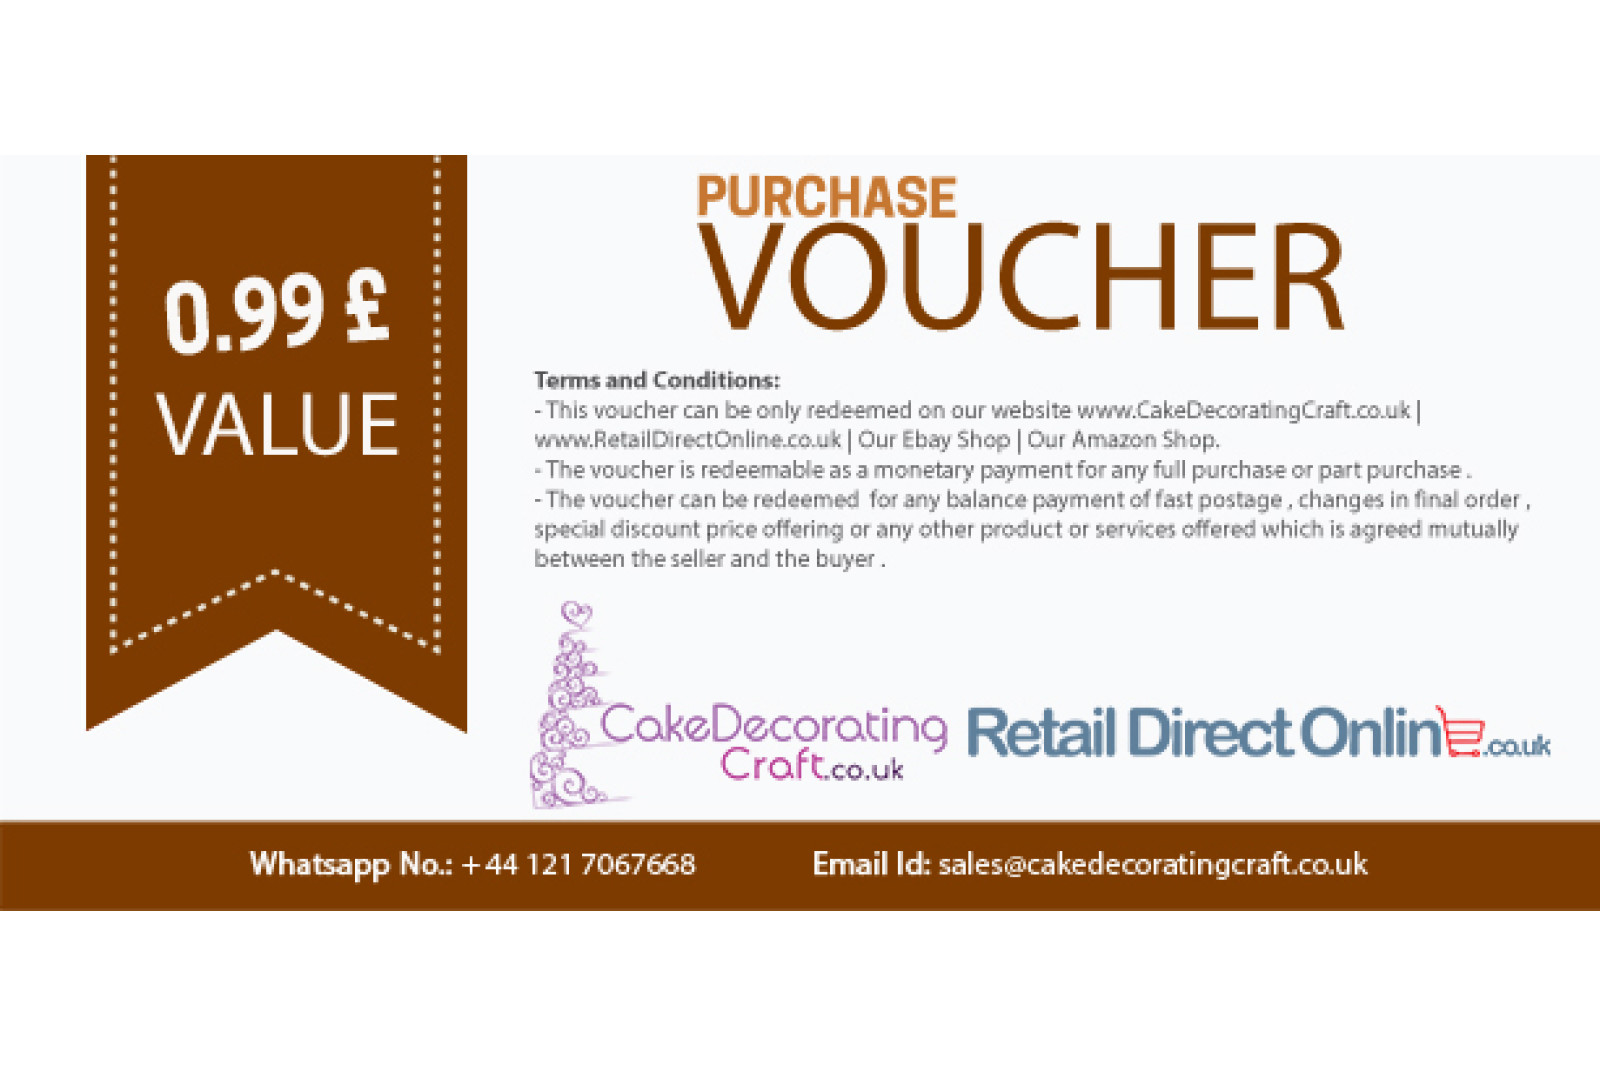 Purchase Voucher | Balance Payment Voucher | Value £0.99